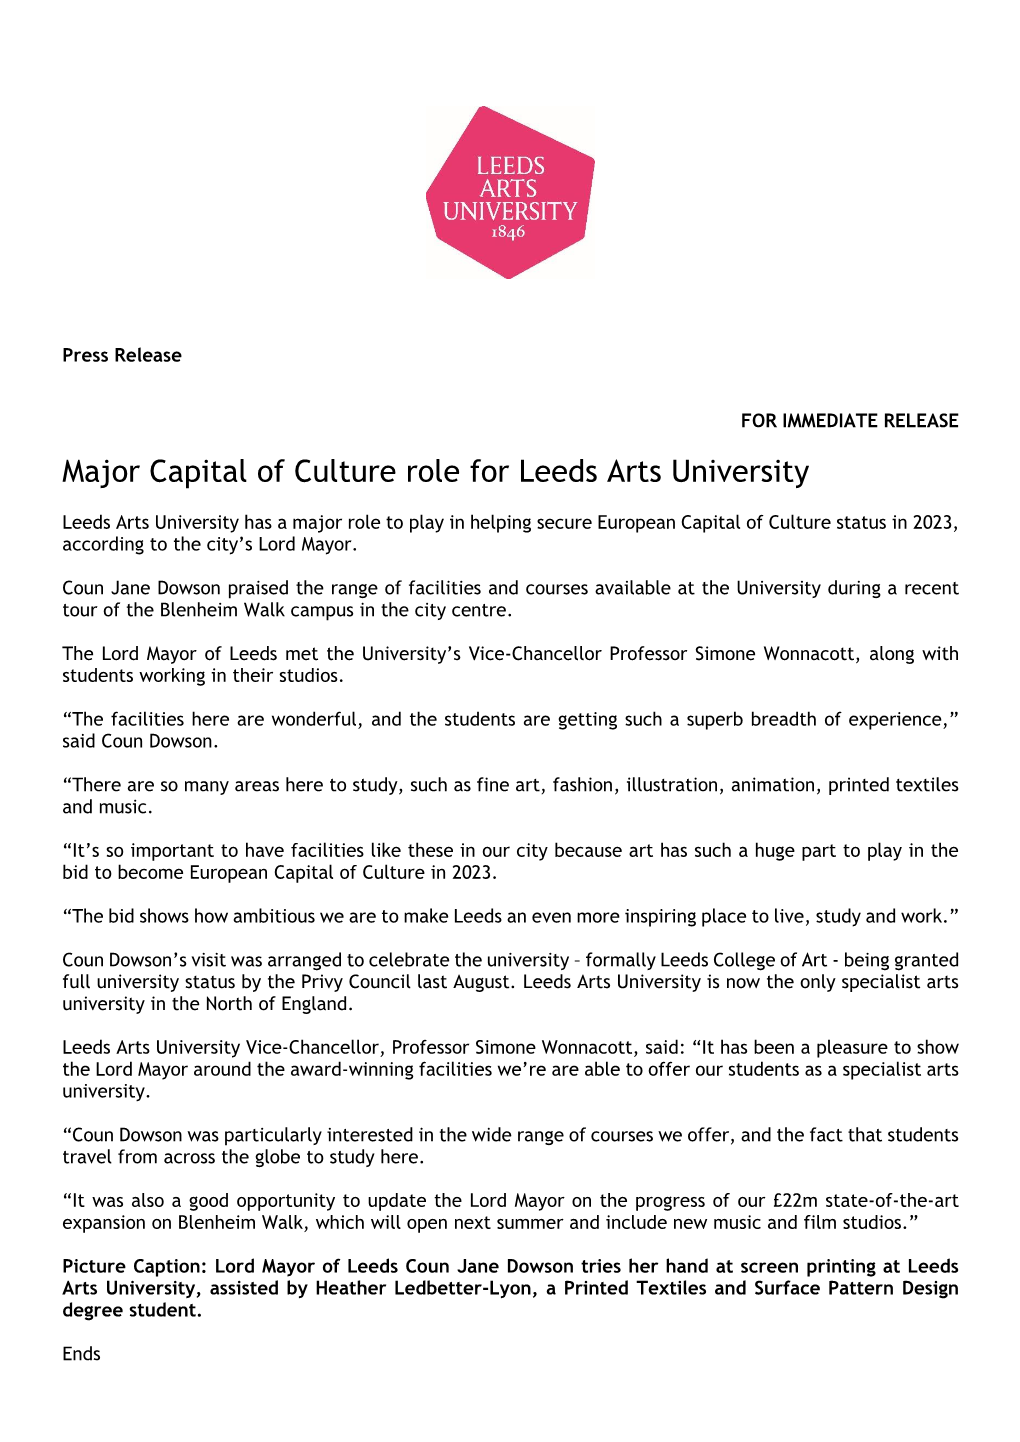 Major Capital of Culture Role for Leeds Arts University